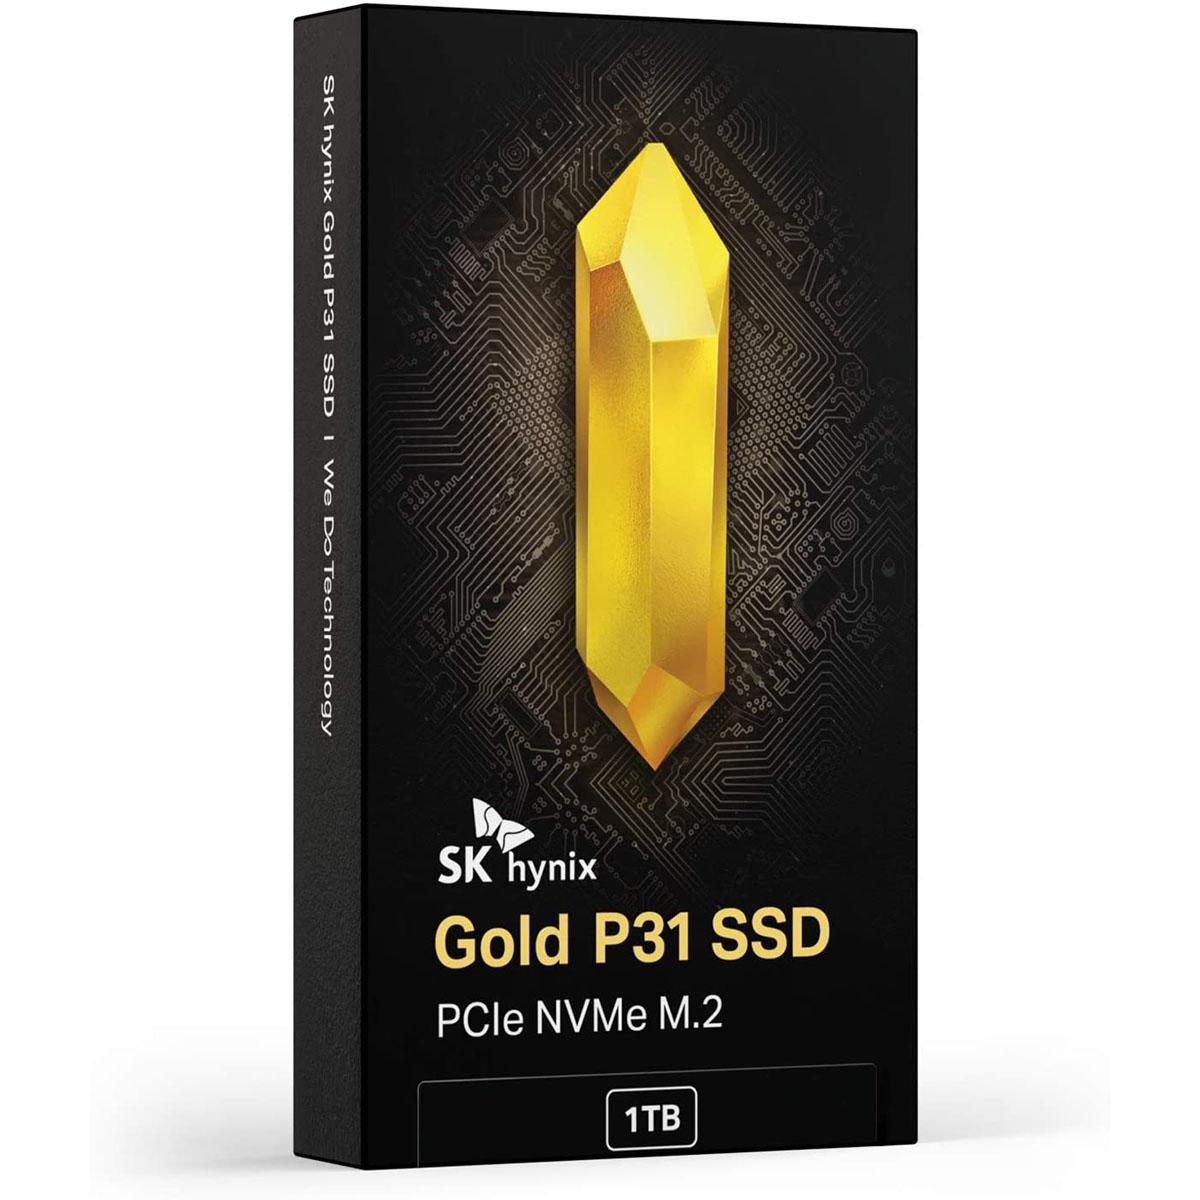 SK hynix Gold P31 PCIe NVMe Gen3 1TB M2 SSD for $114.74 Shipped